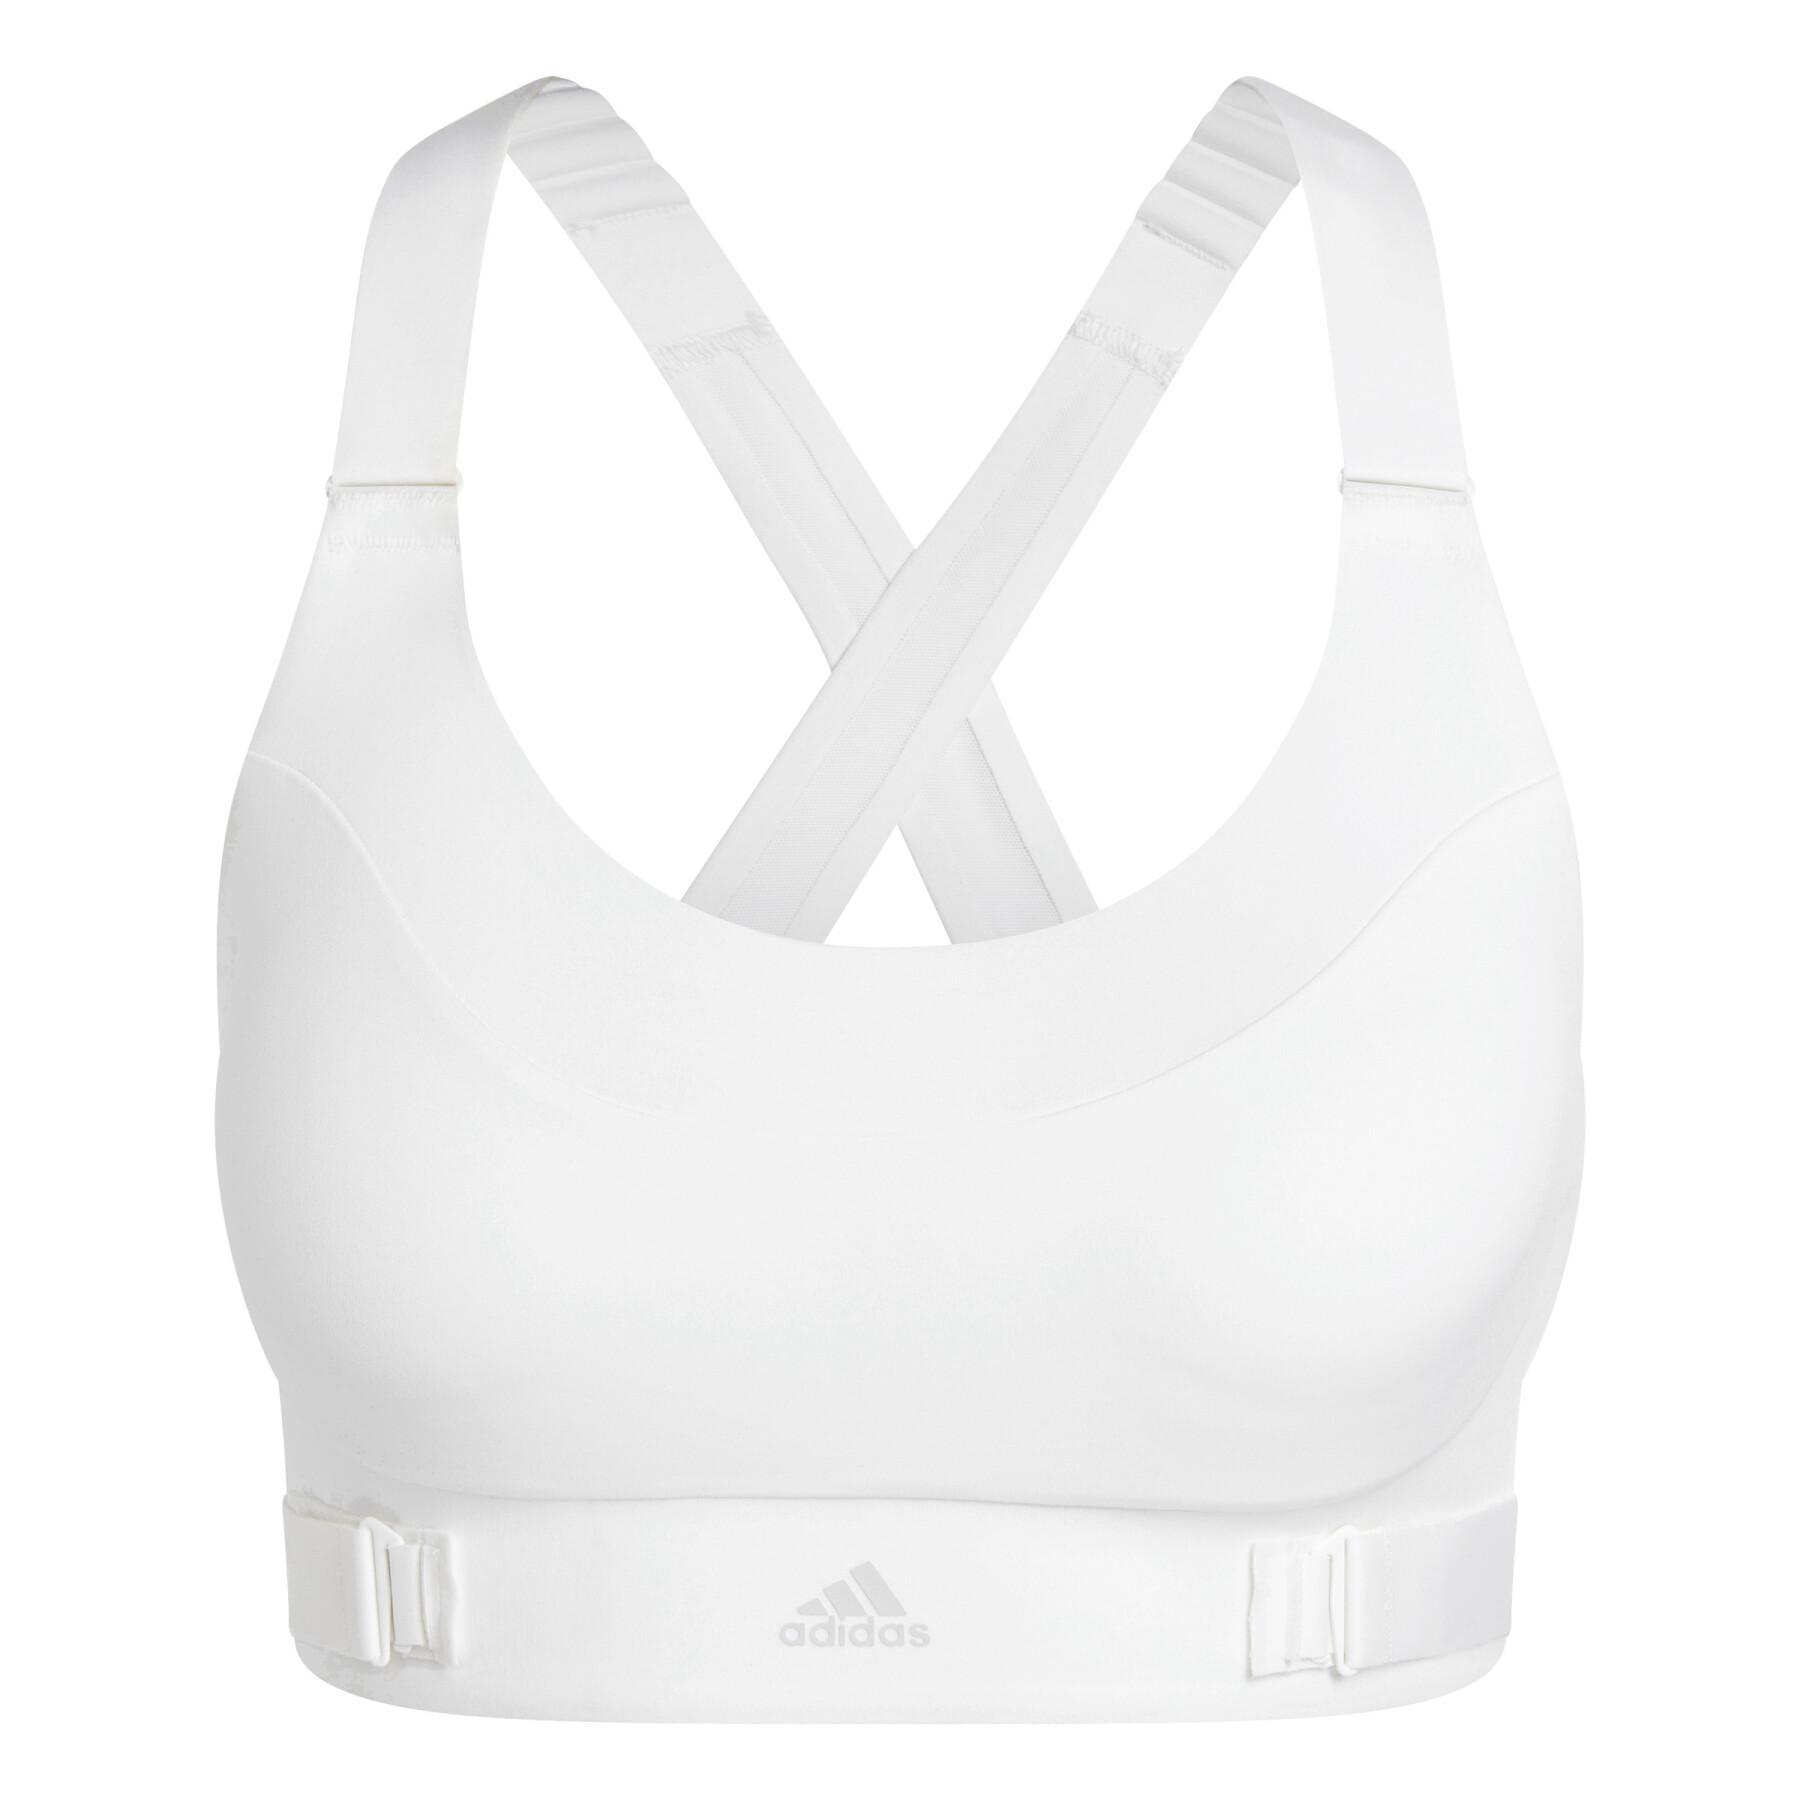 High support bra for women adidas FastImpact Luxe Run - Sports bras -  Women's wear - Handball wear